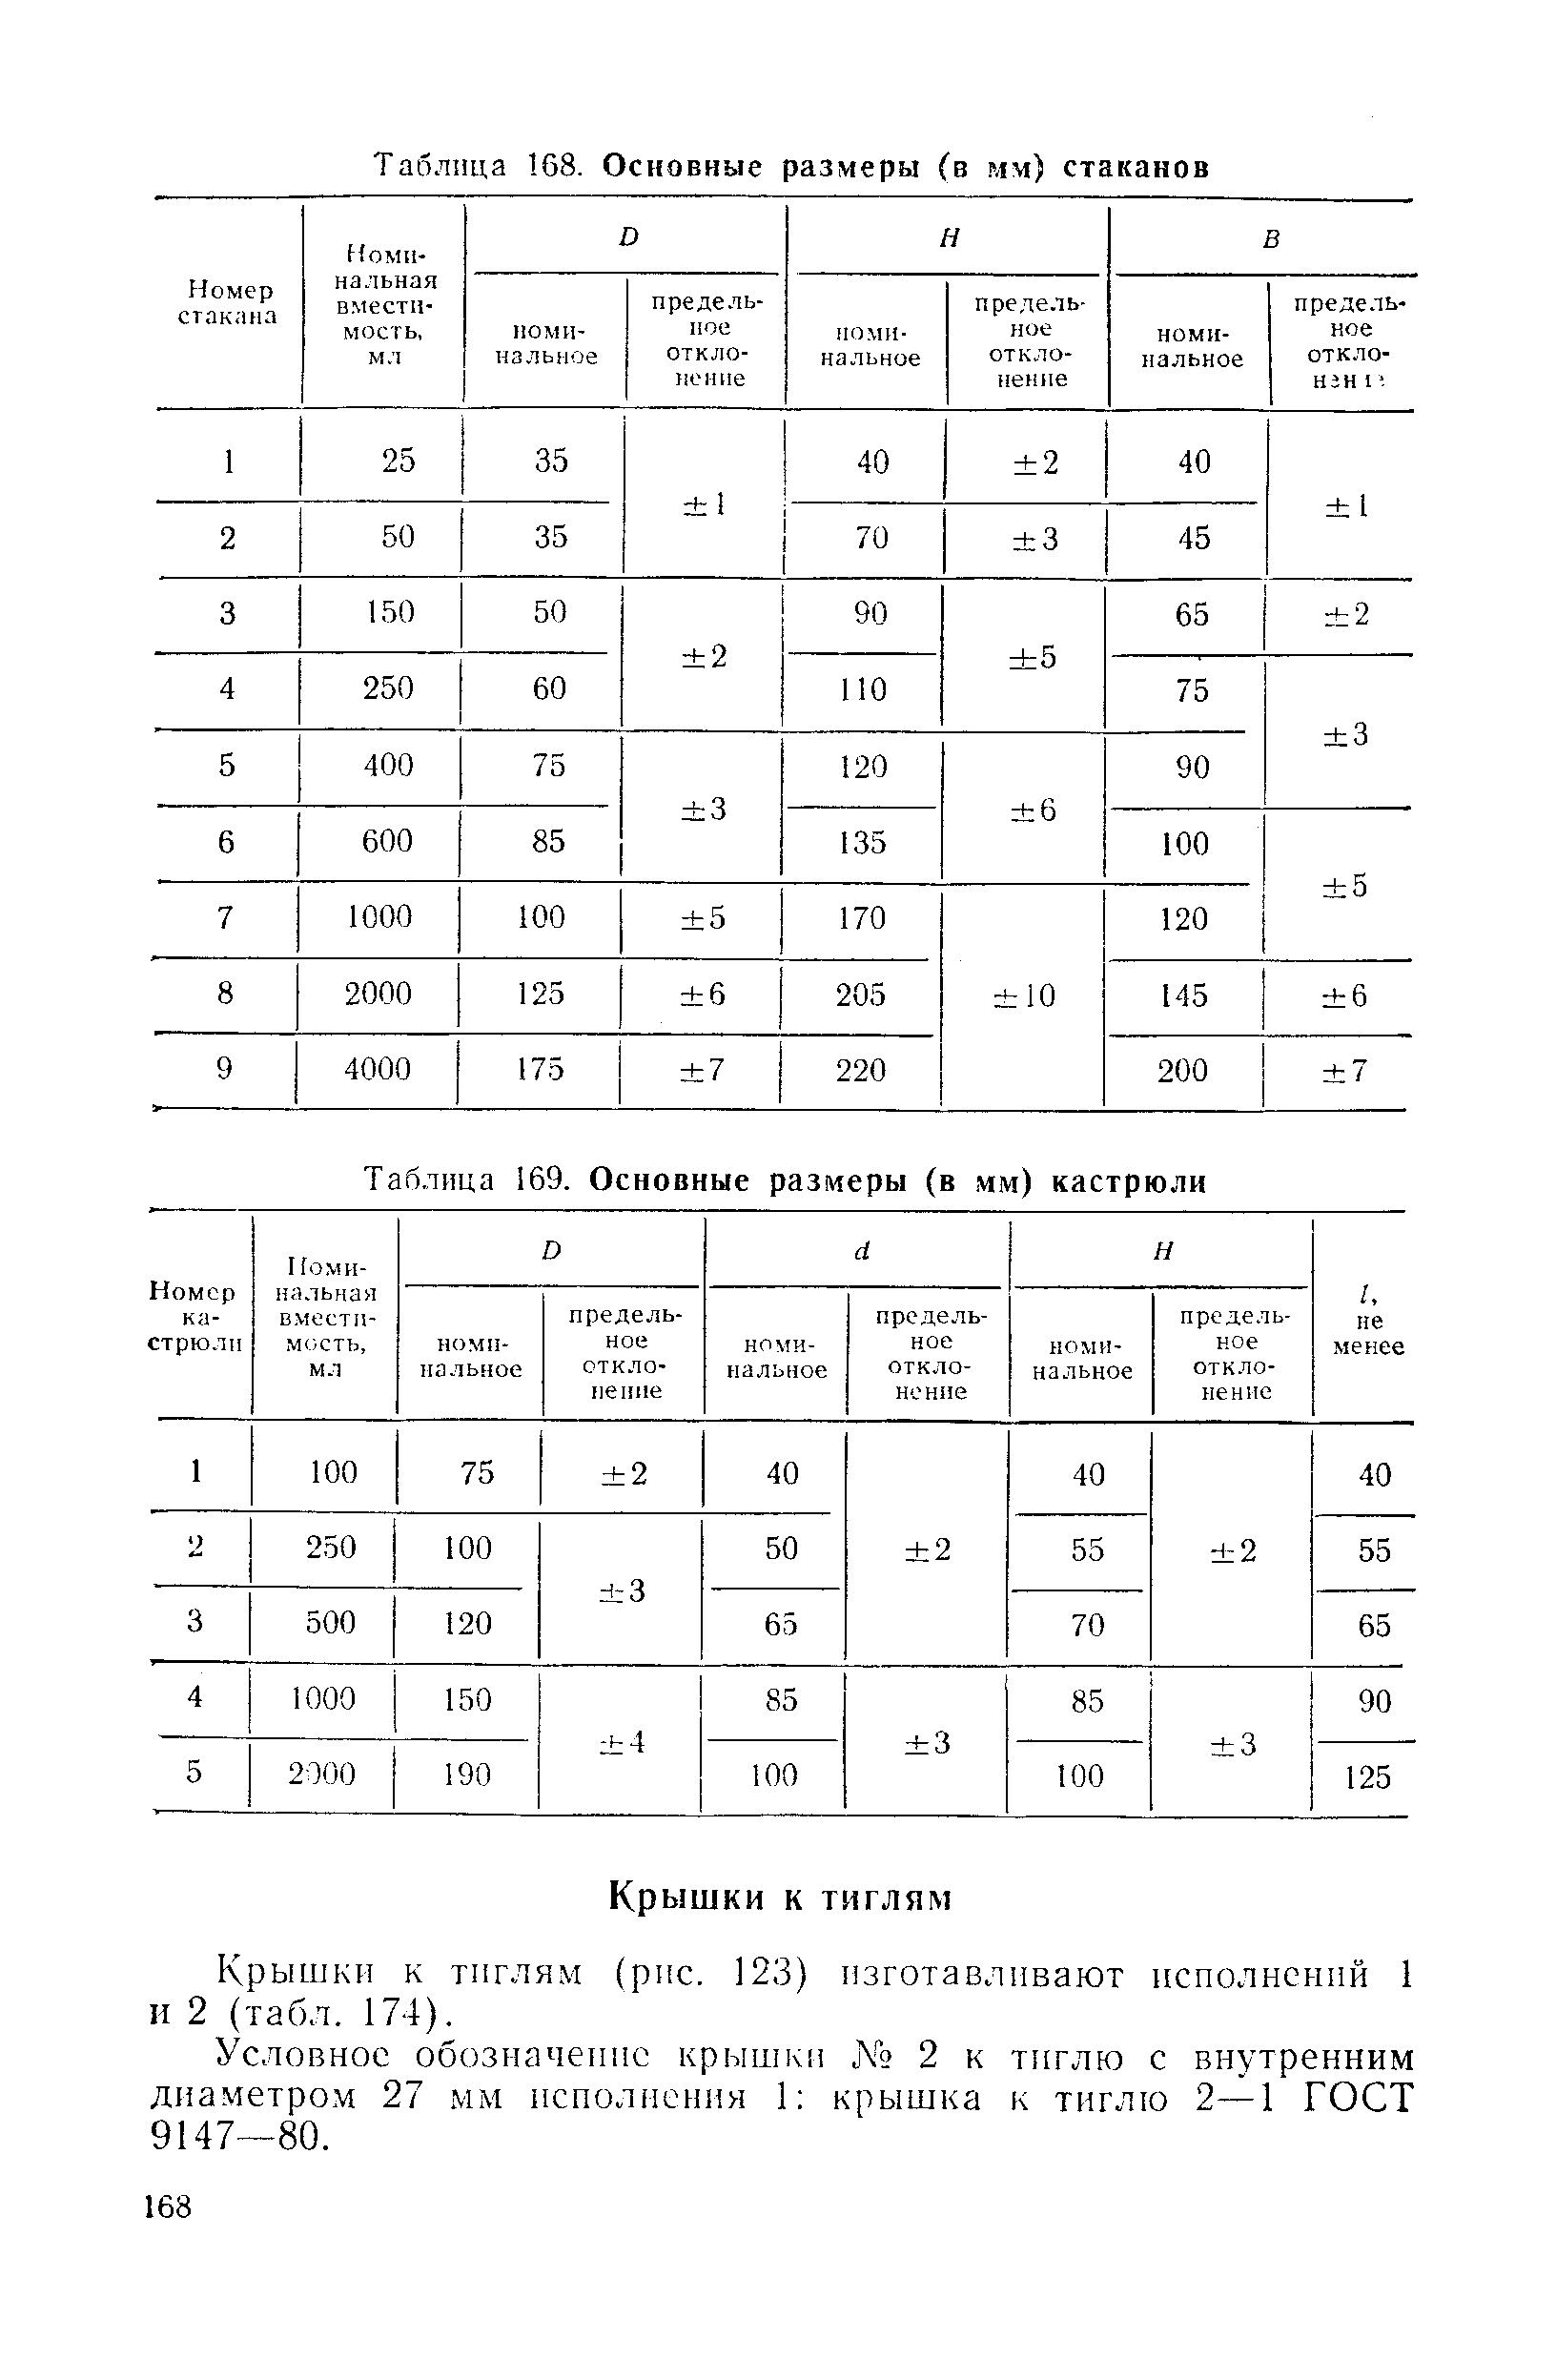 Крышки к тиглям (рис. 123) изготавливают исполнений 1 и 2 (табл. 174).